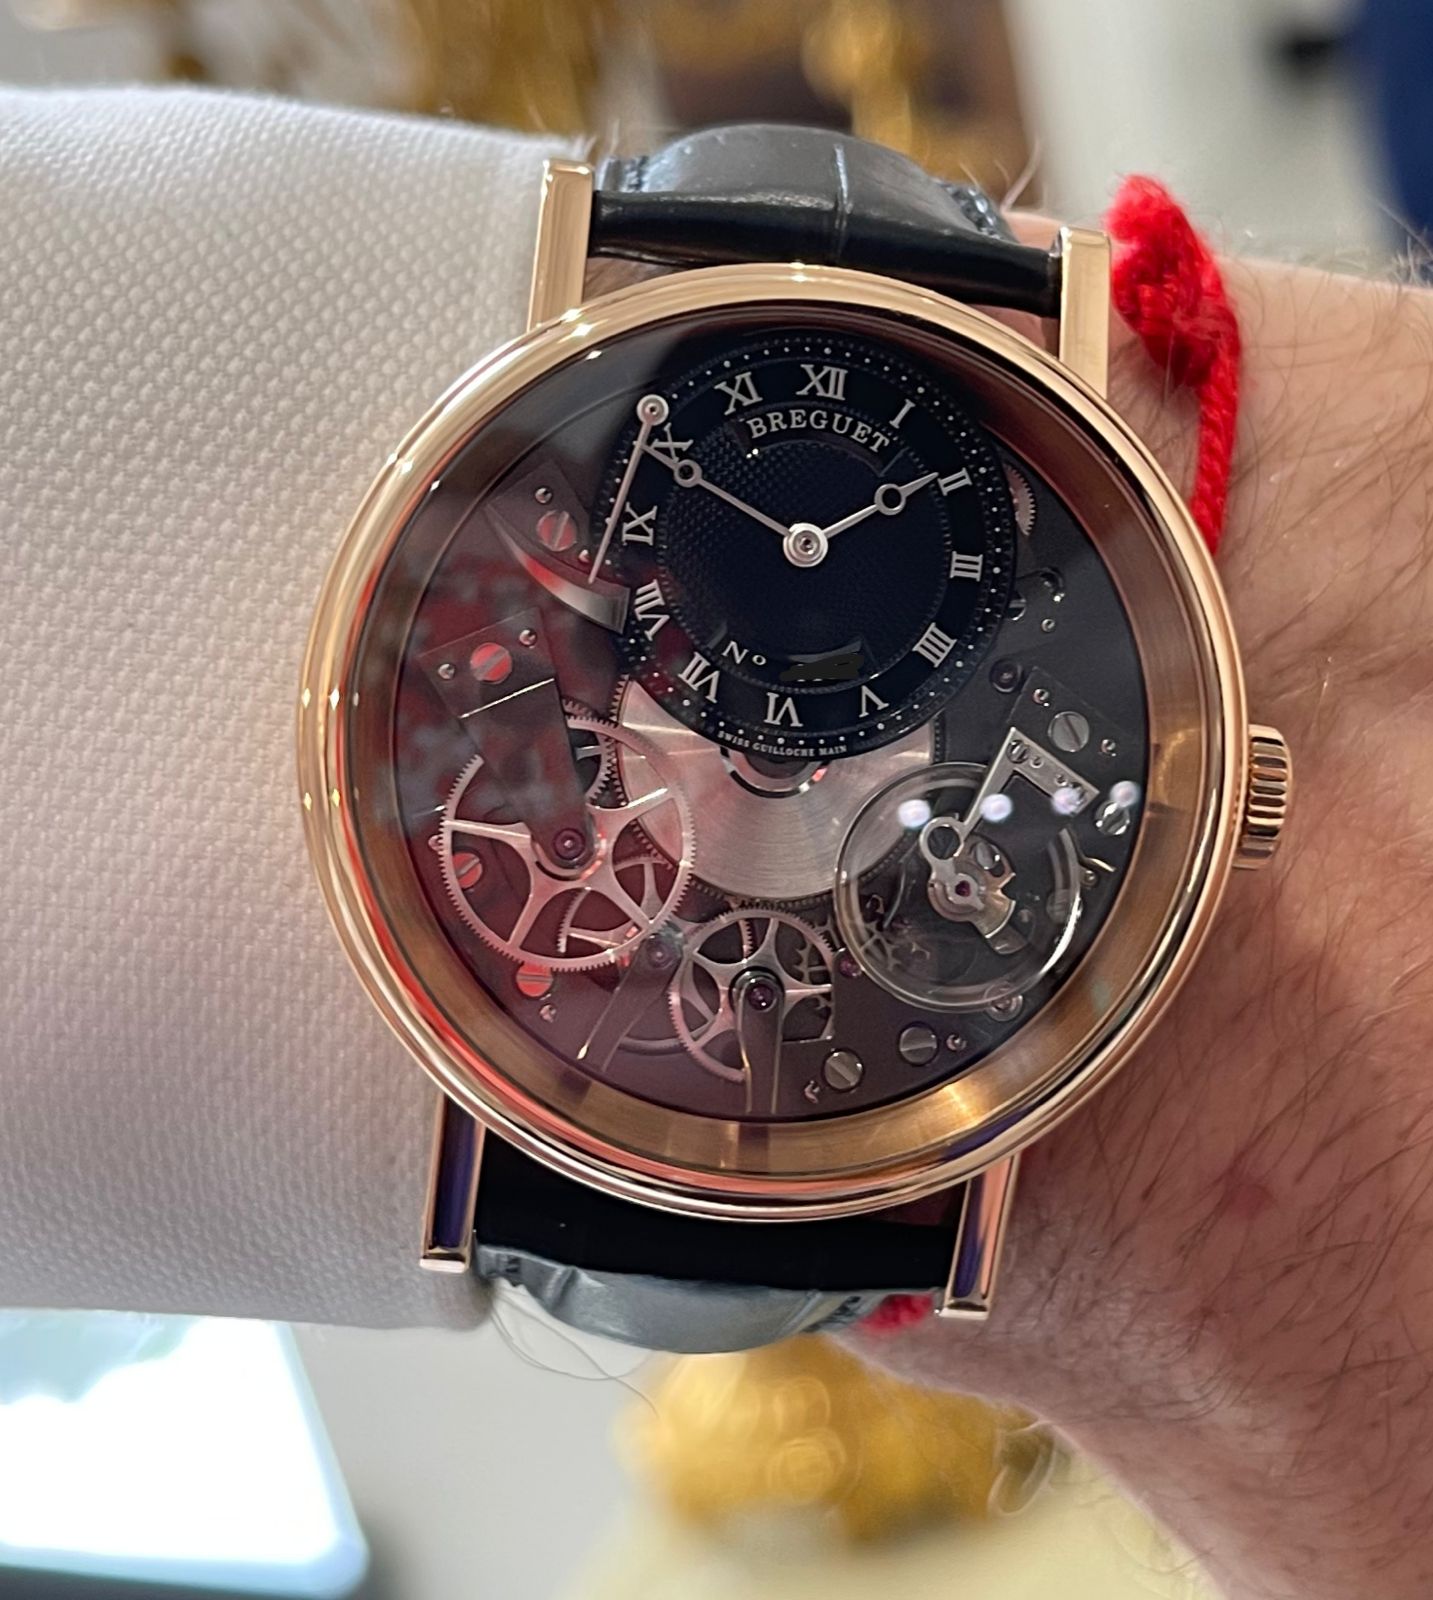 Швейцарские часы Breguet Tradition. 7057 7057BR/G9/9W6 #11